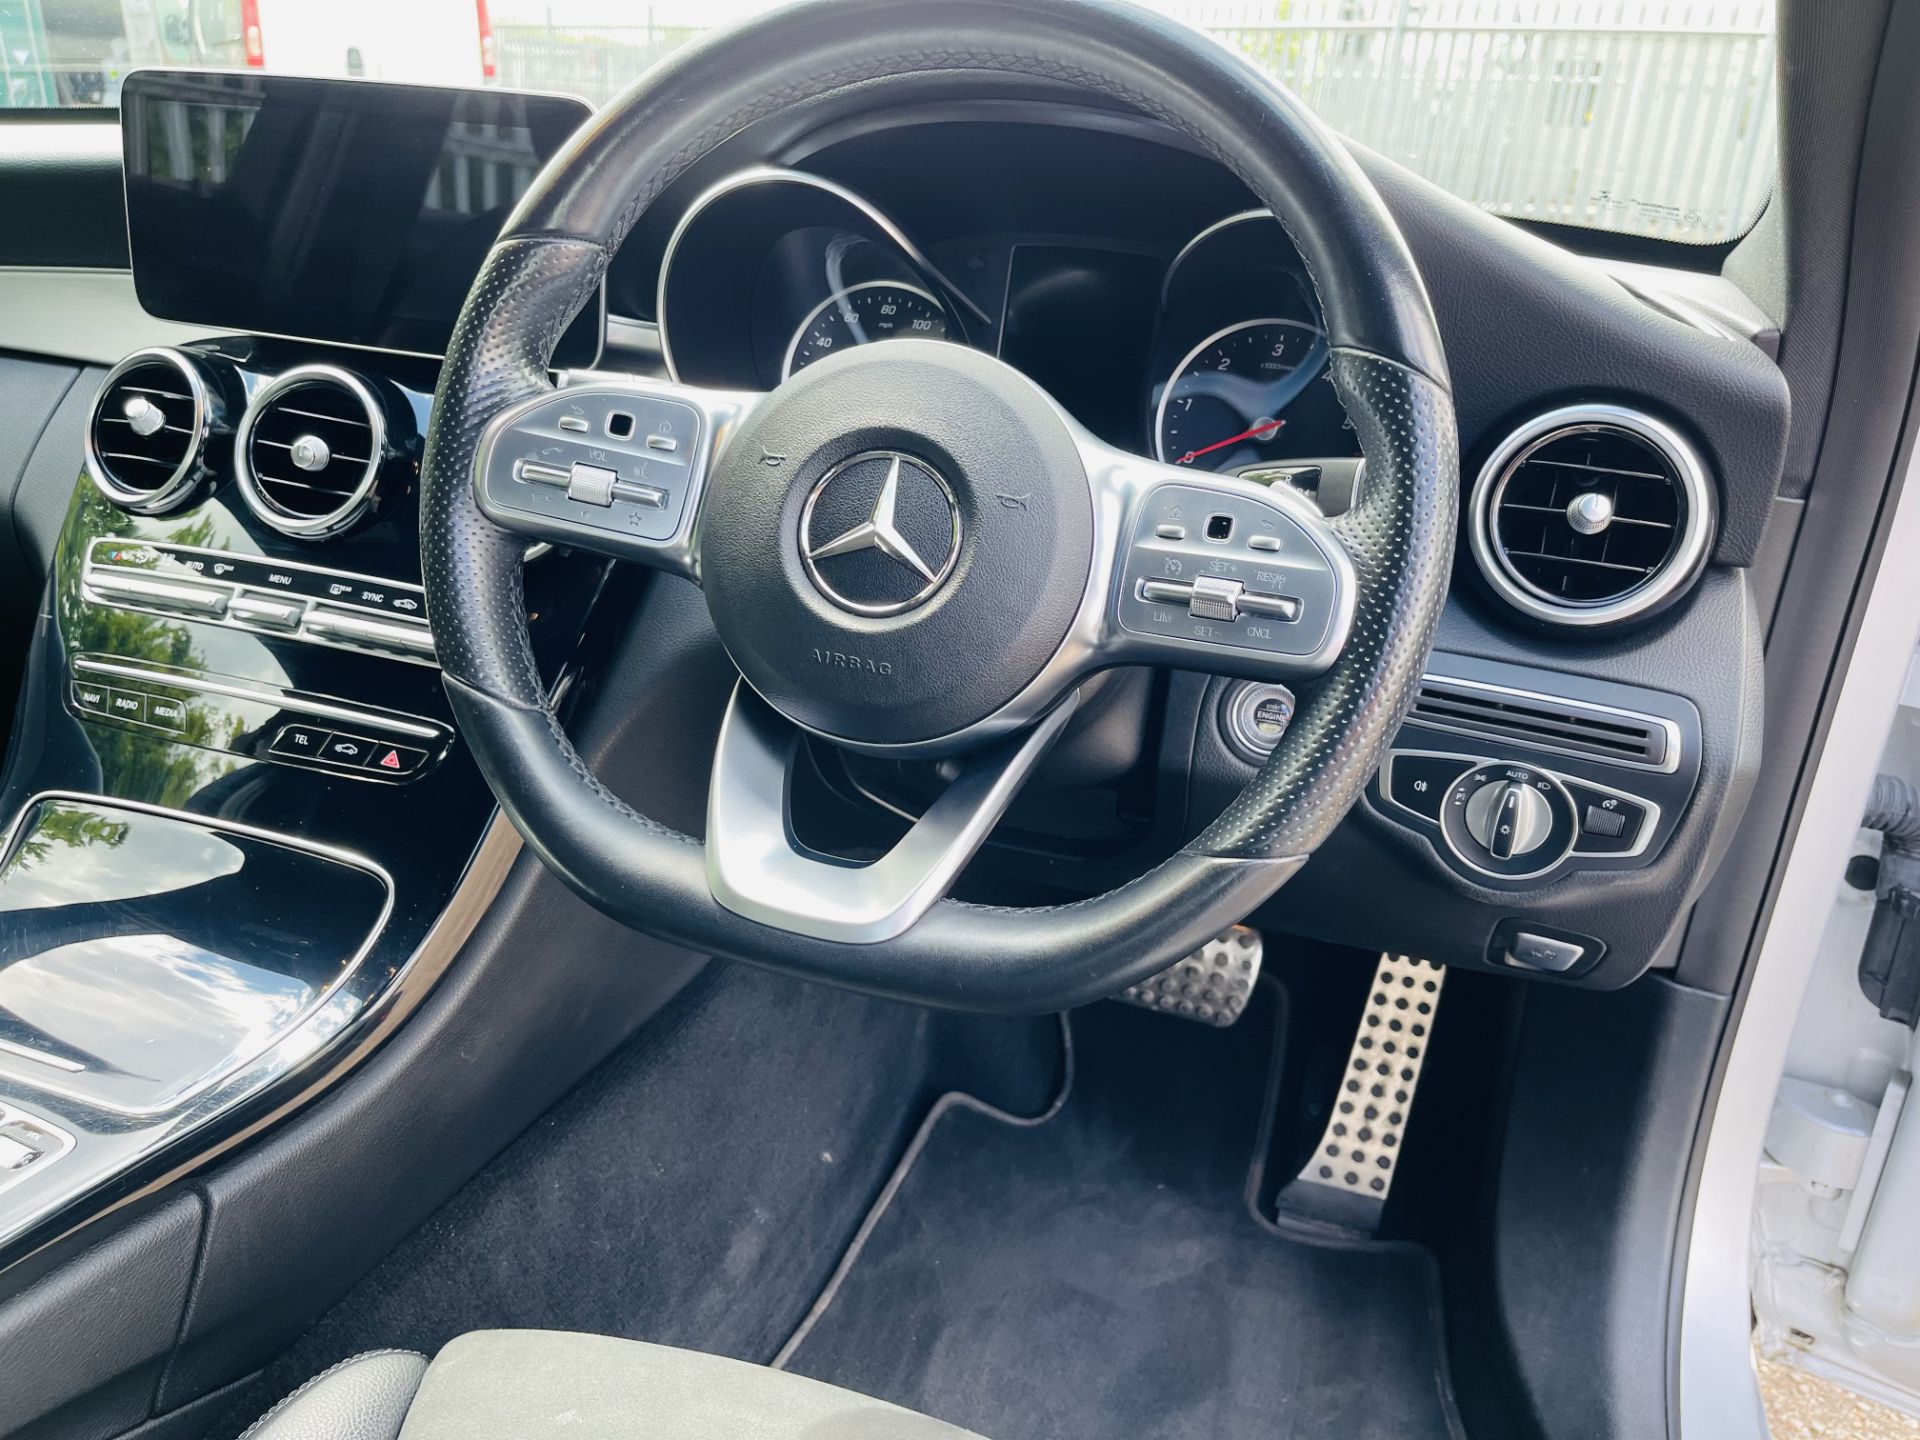 ** ON SALE ** Mercedes Benz C220 AMG Line 9G-Tronic Auto 2019 ‘69 Reg’ - Sat Nav - A/C - Euro 6 - Image 20 of 39